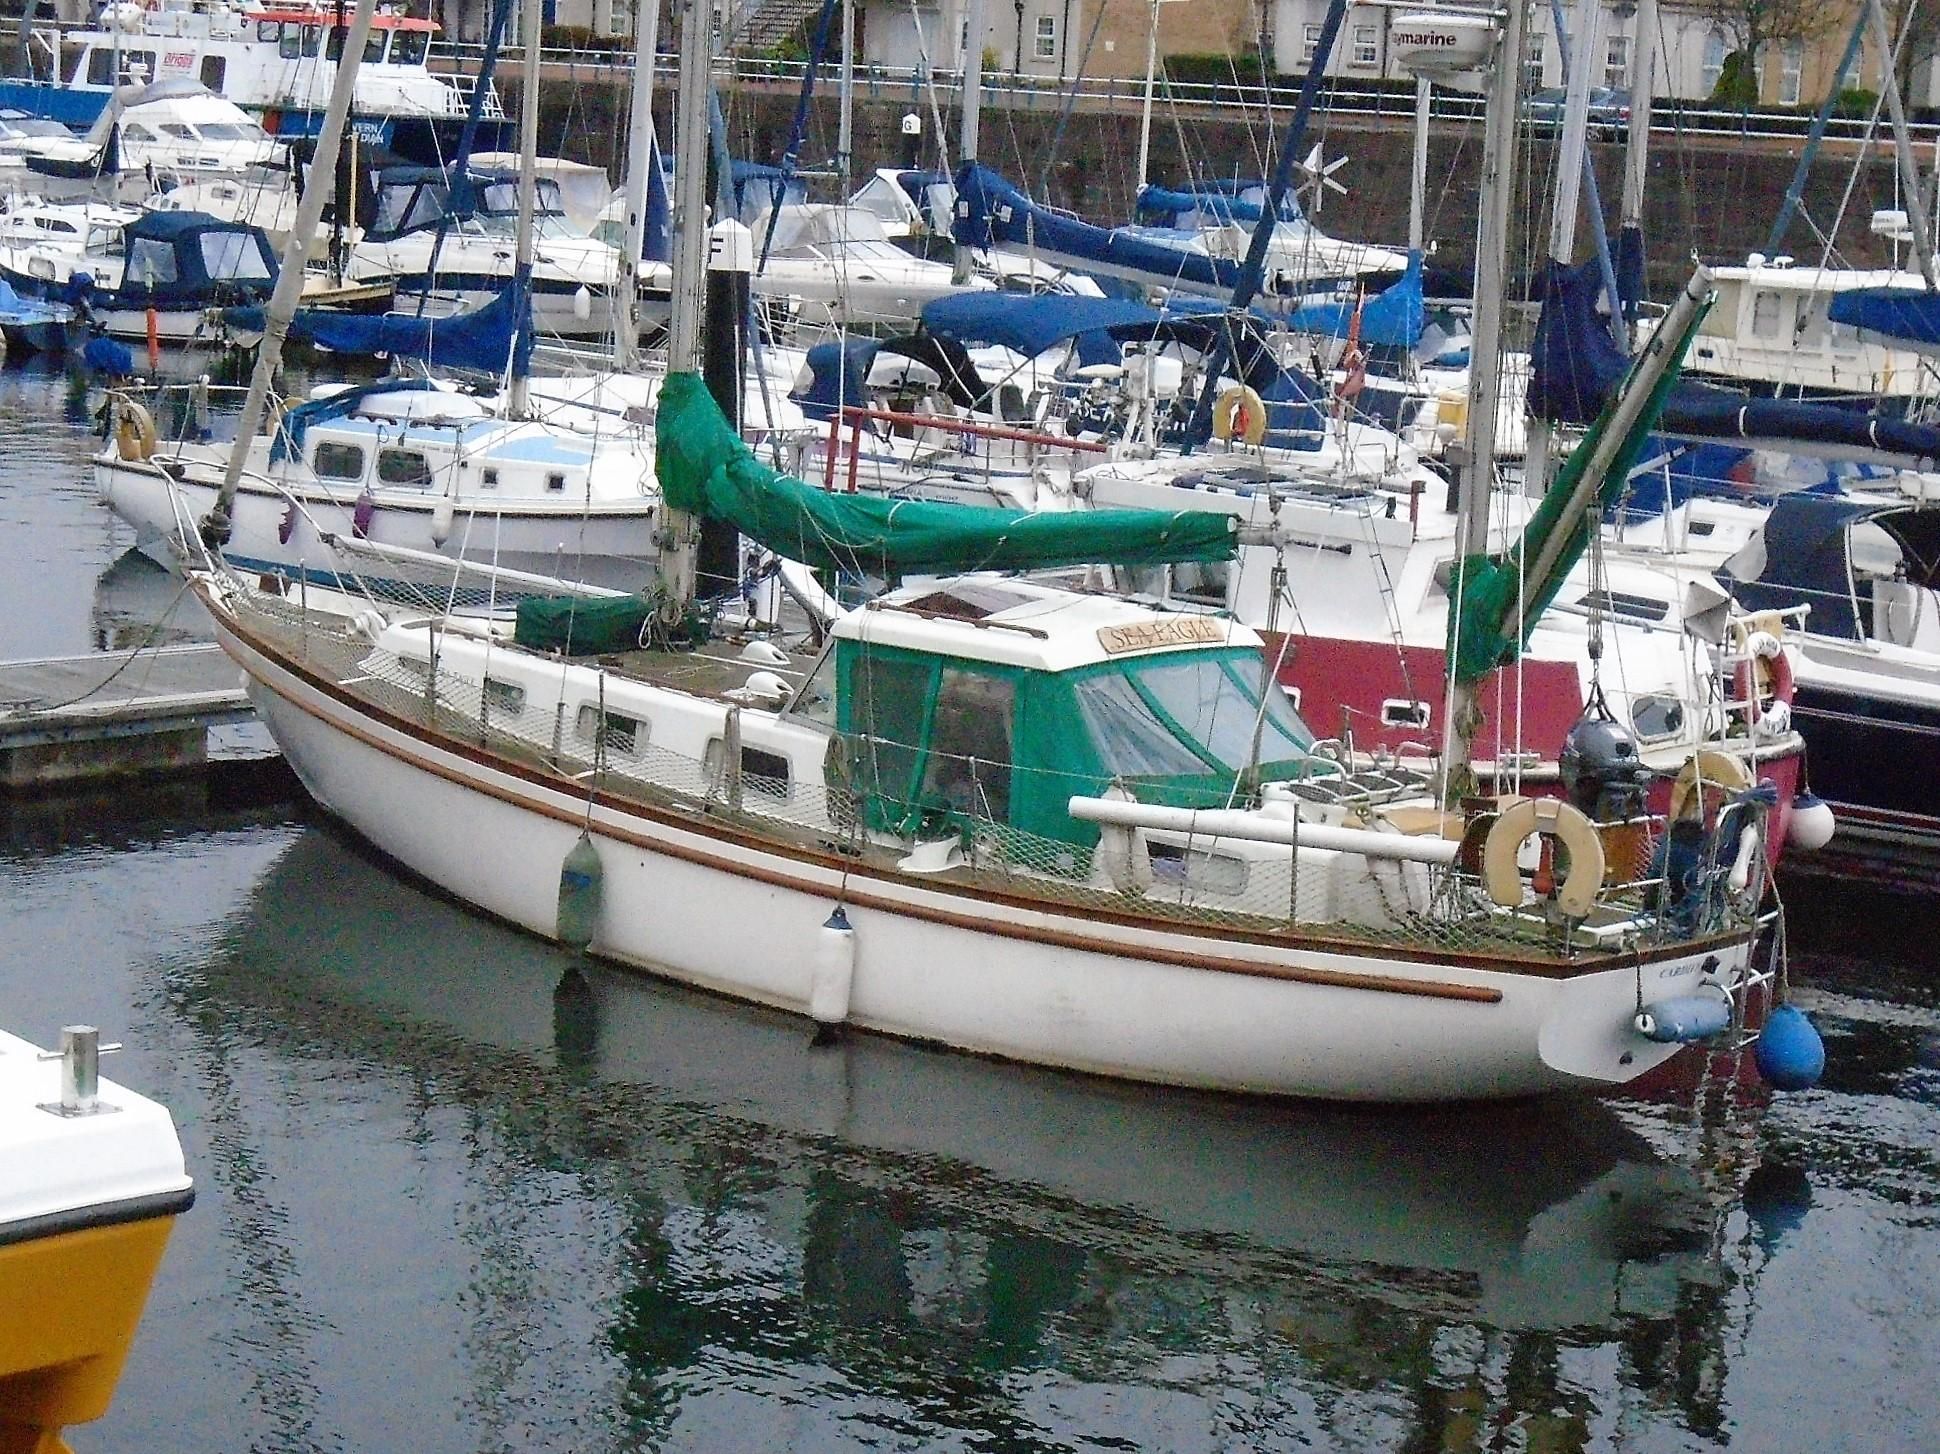 nicholson yachts for sale uk